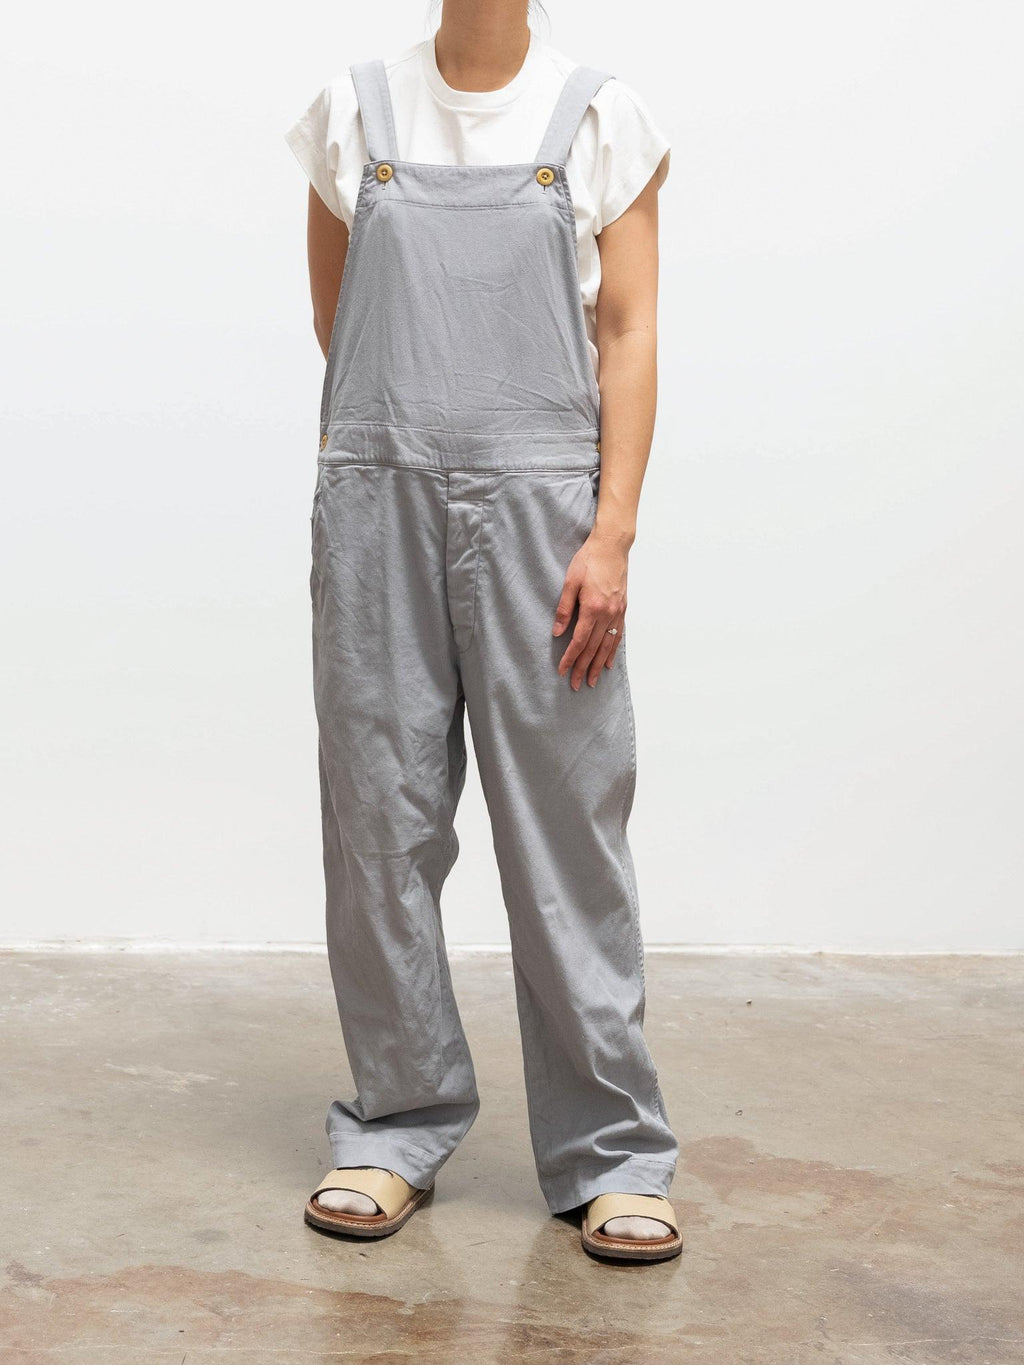 Namu Shop - ts(s) Garment Dyed Lyocell Cotton Stretch Overalls - Light Gray